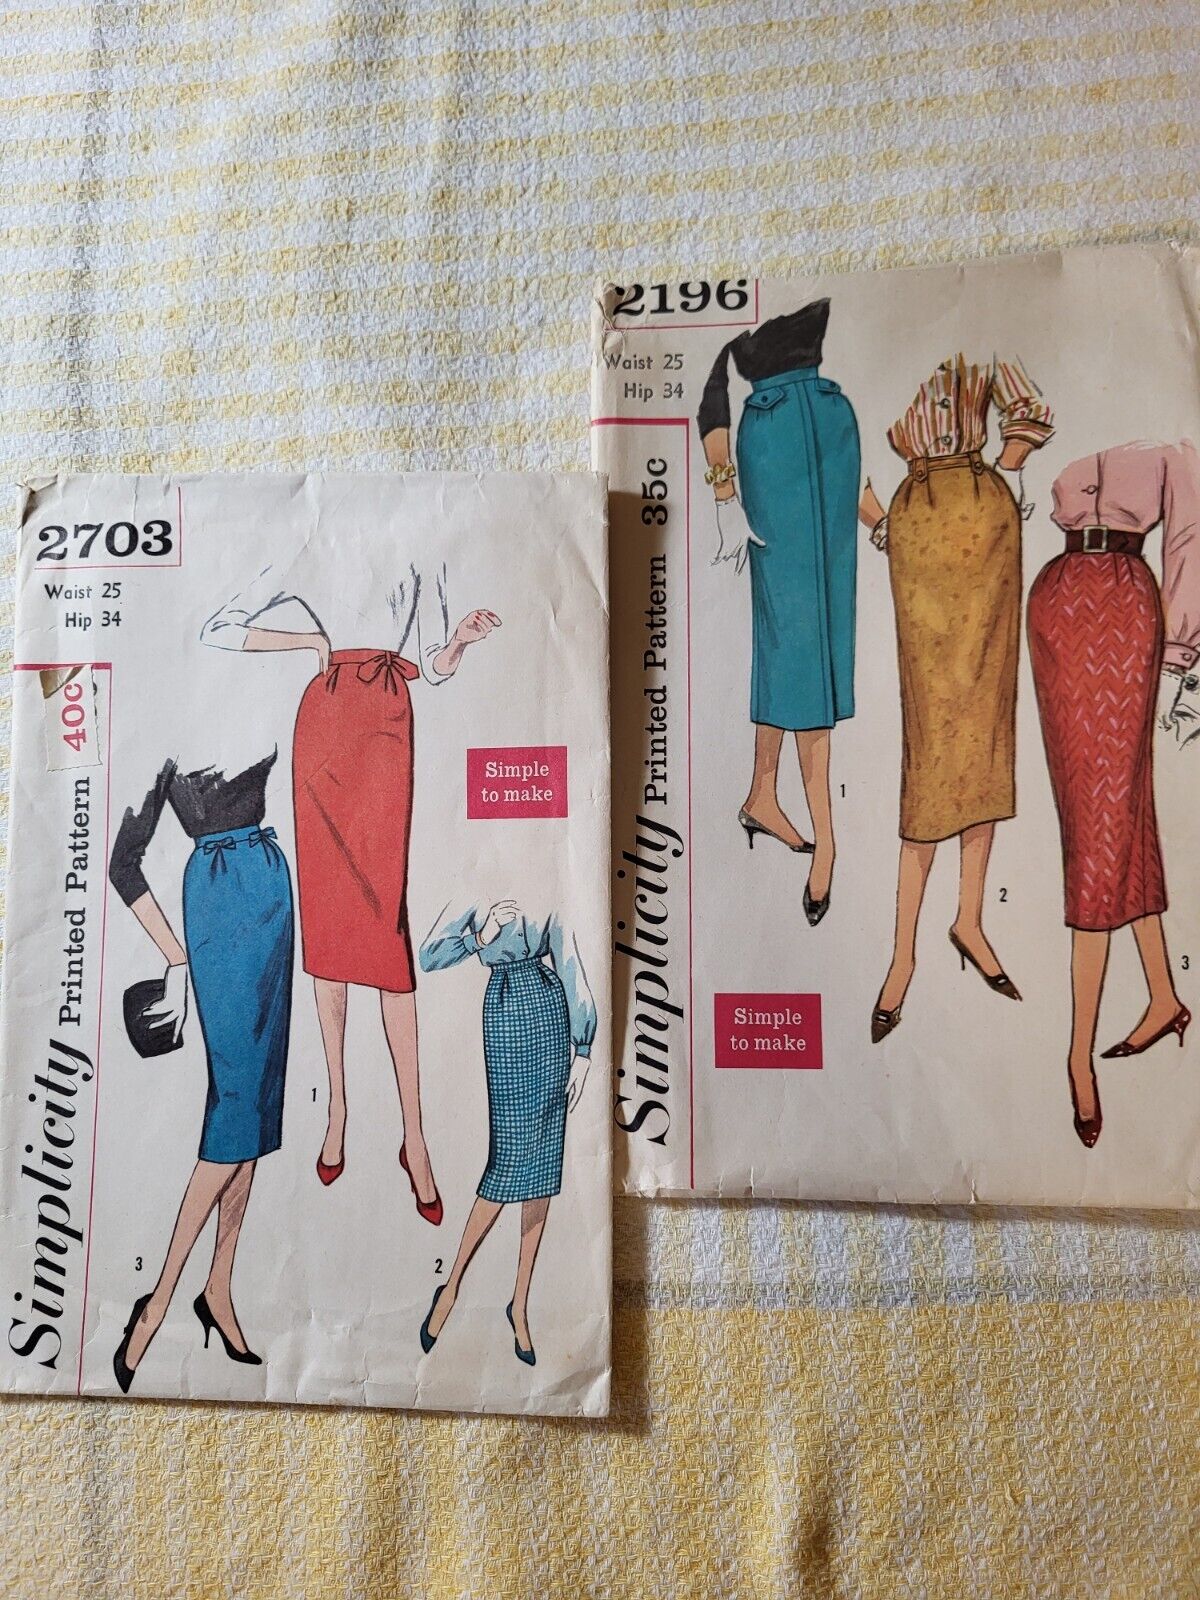 2 Simplicity Pencil Skirt Sewing Patterns 2196 2703 Hip 34 Waist 25 Vintage 